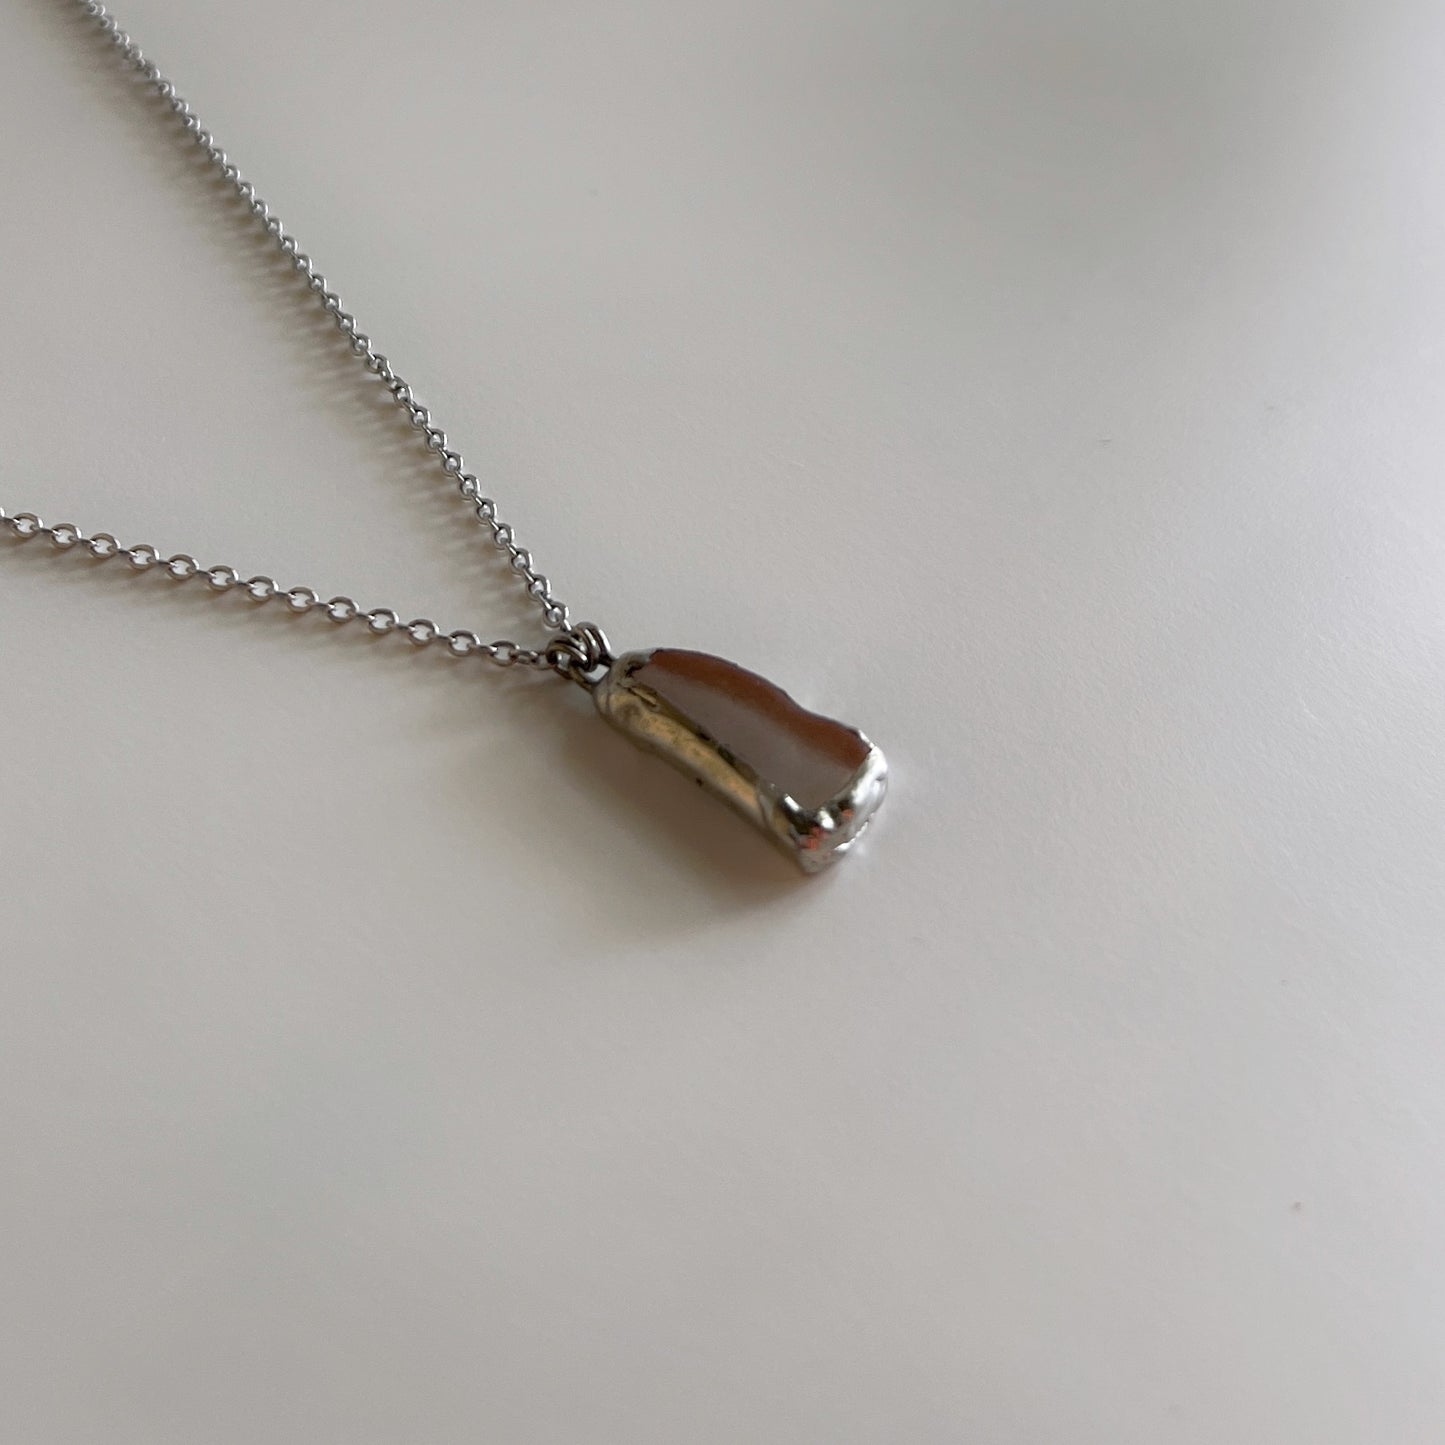 Soft White St Croix Sea Glass Necklace